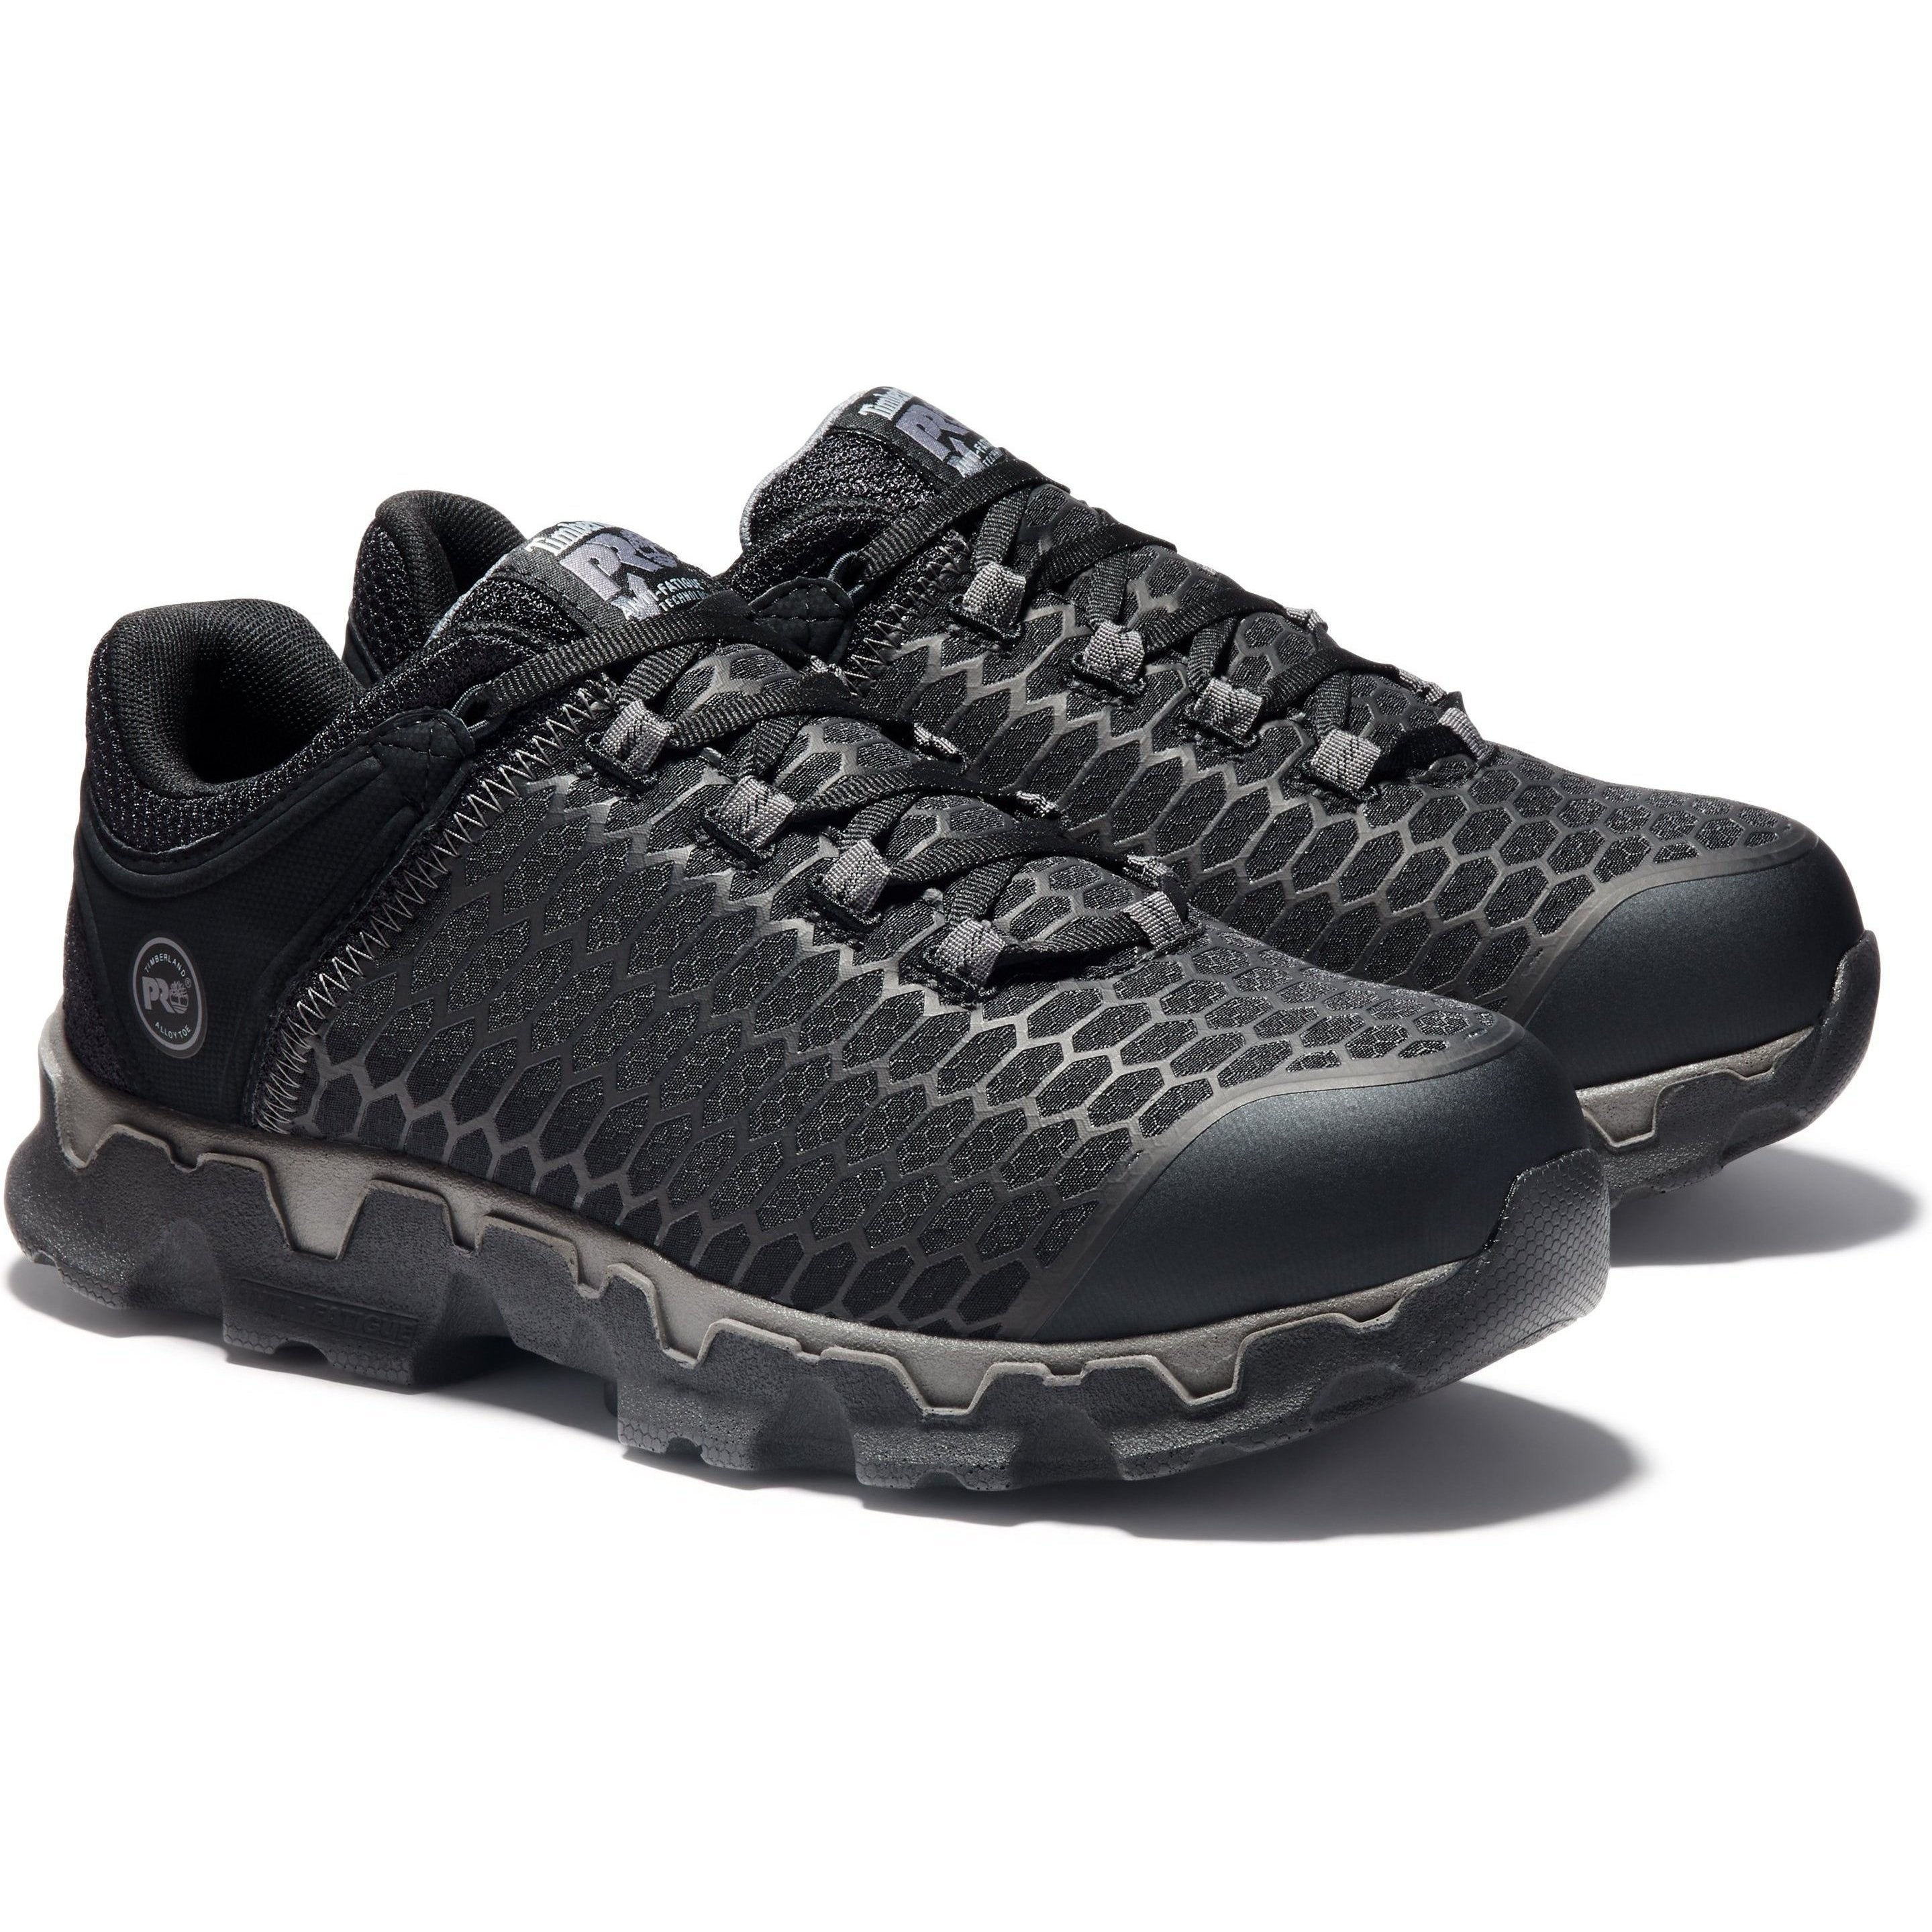 Timberland PRO Men's Powertrain Sport SD+ Alloy Toe Work Shoe TB1A1B6U001 7 / Medium / Black Ripstop Nylon - Overlook Boots